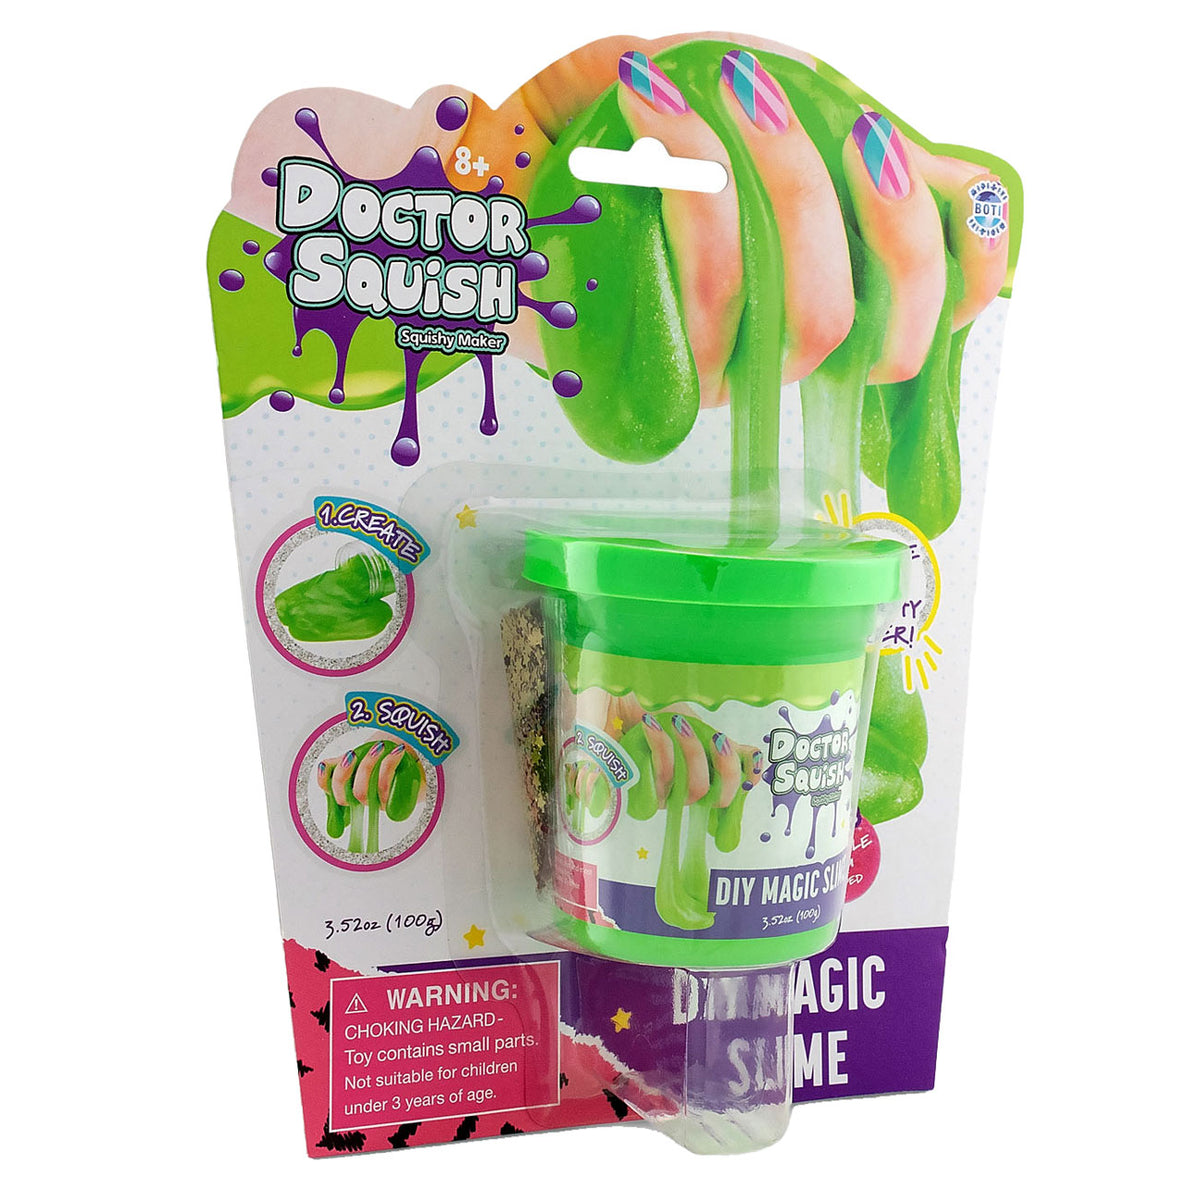 Doctor Squish - DIY Magic Slime - Green